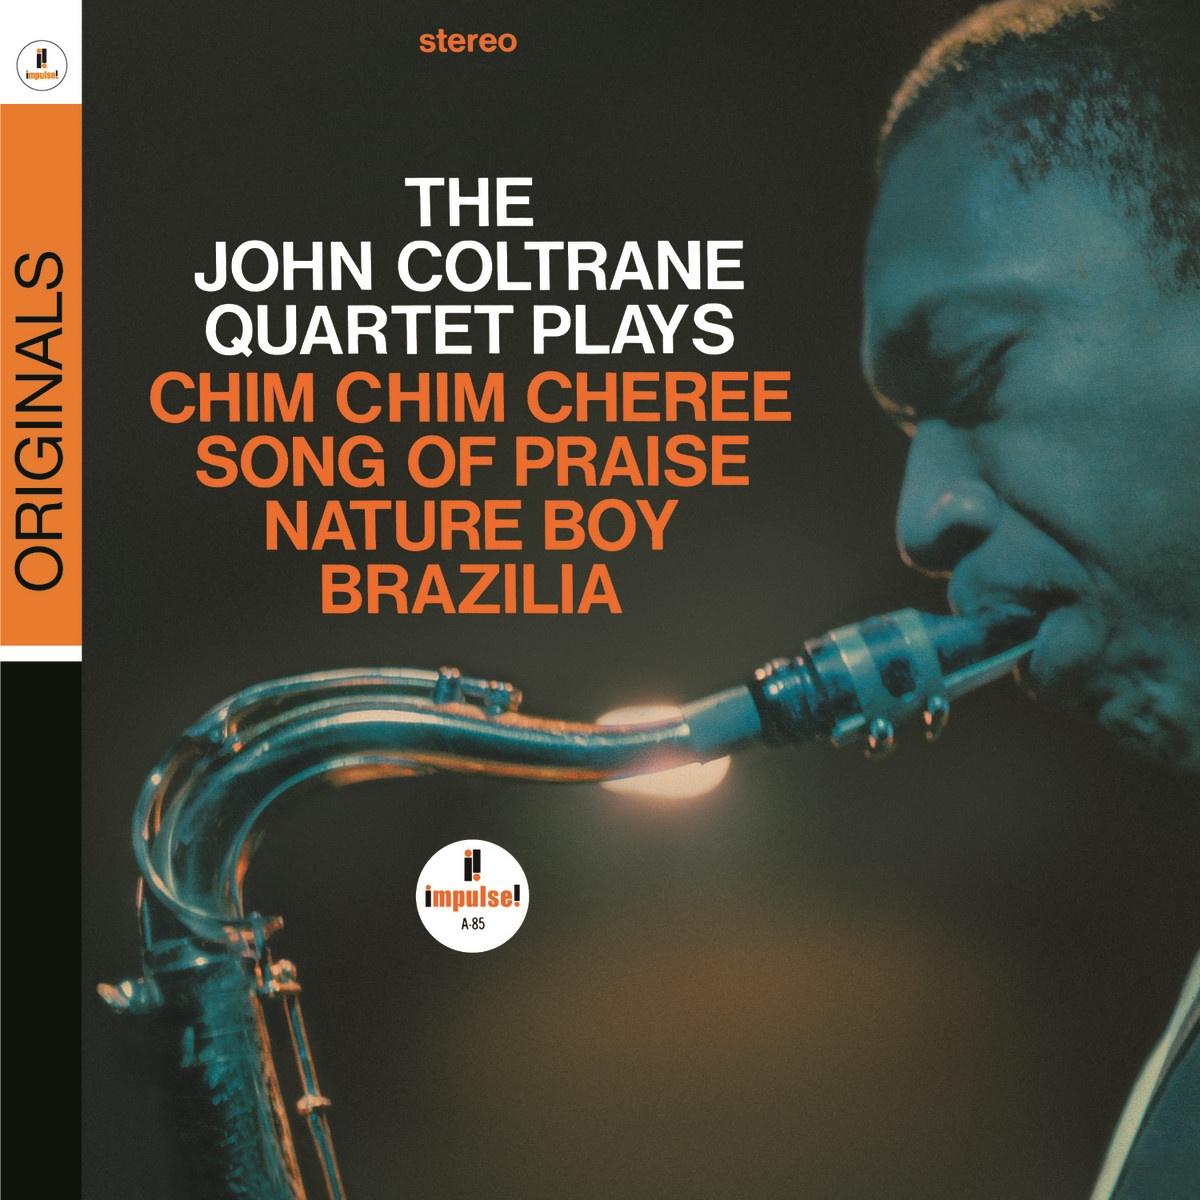 The John Coltrane Quartet Plays (Originals Version)